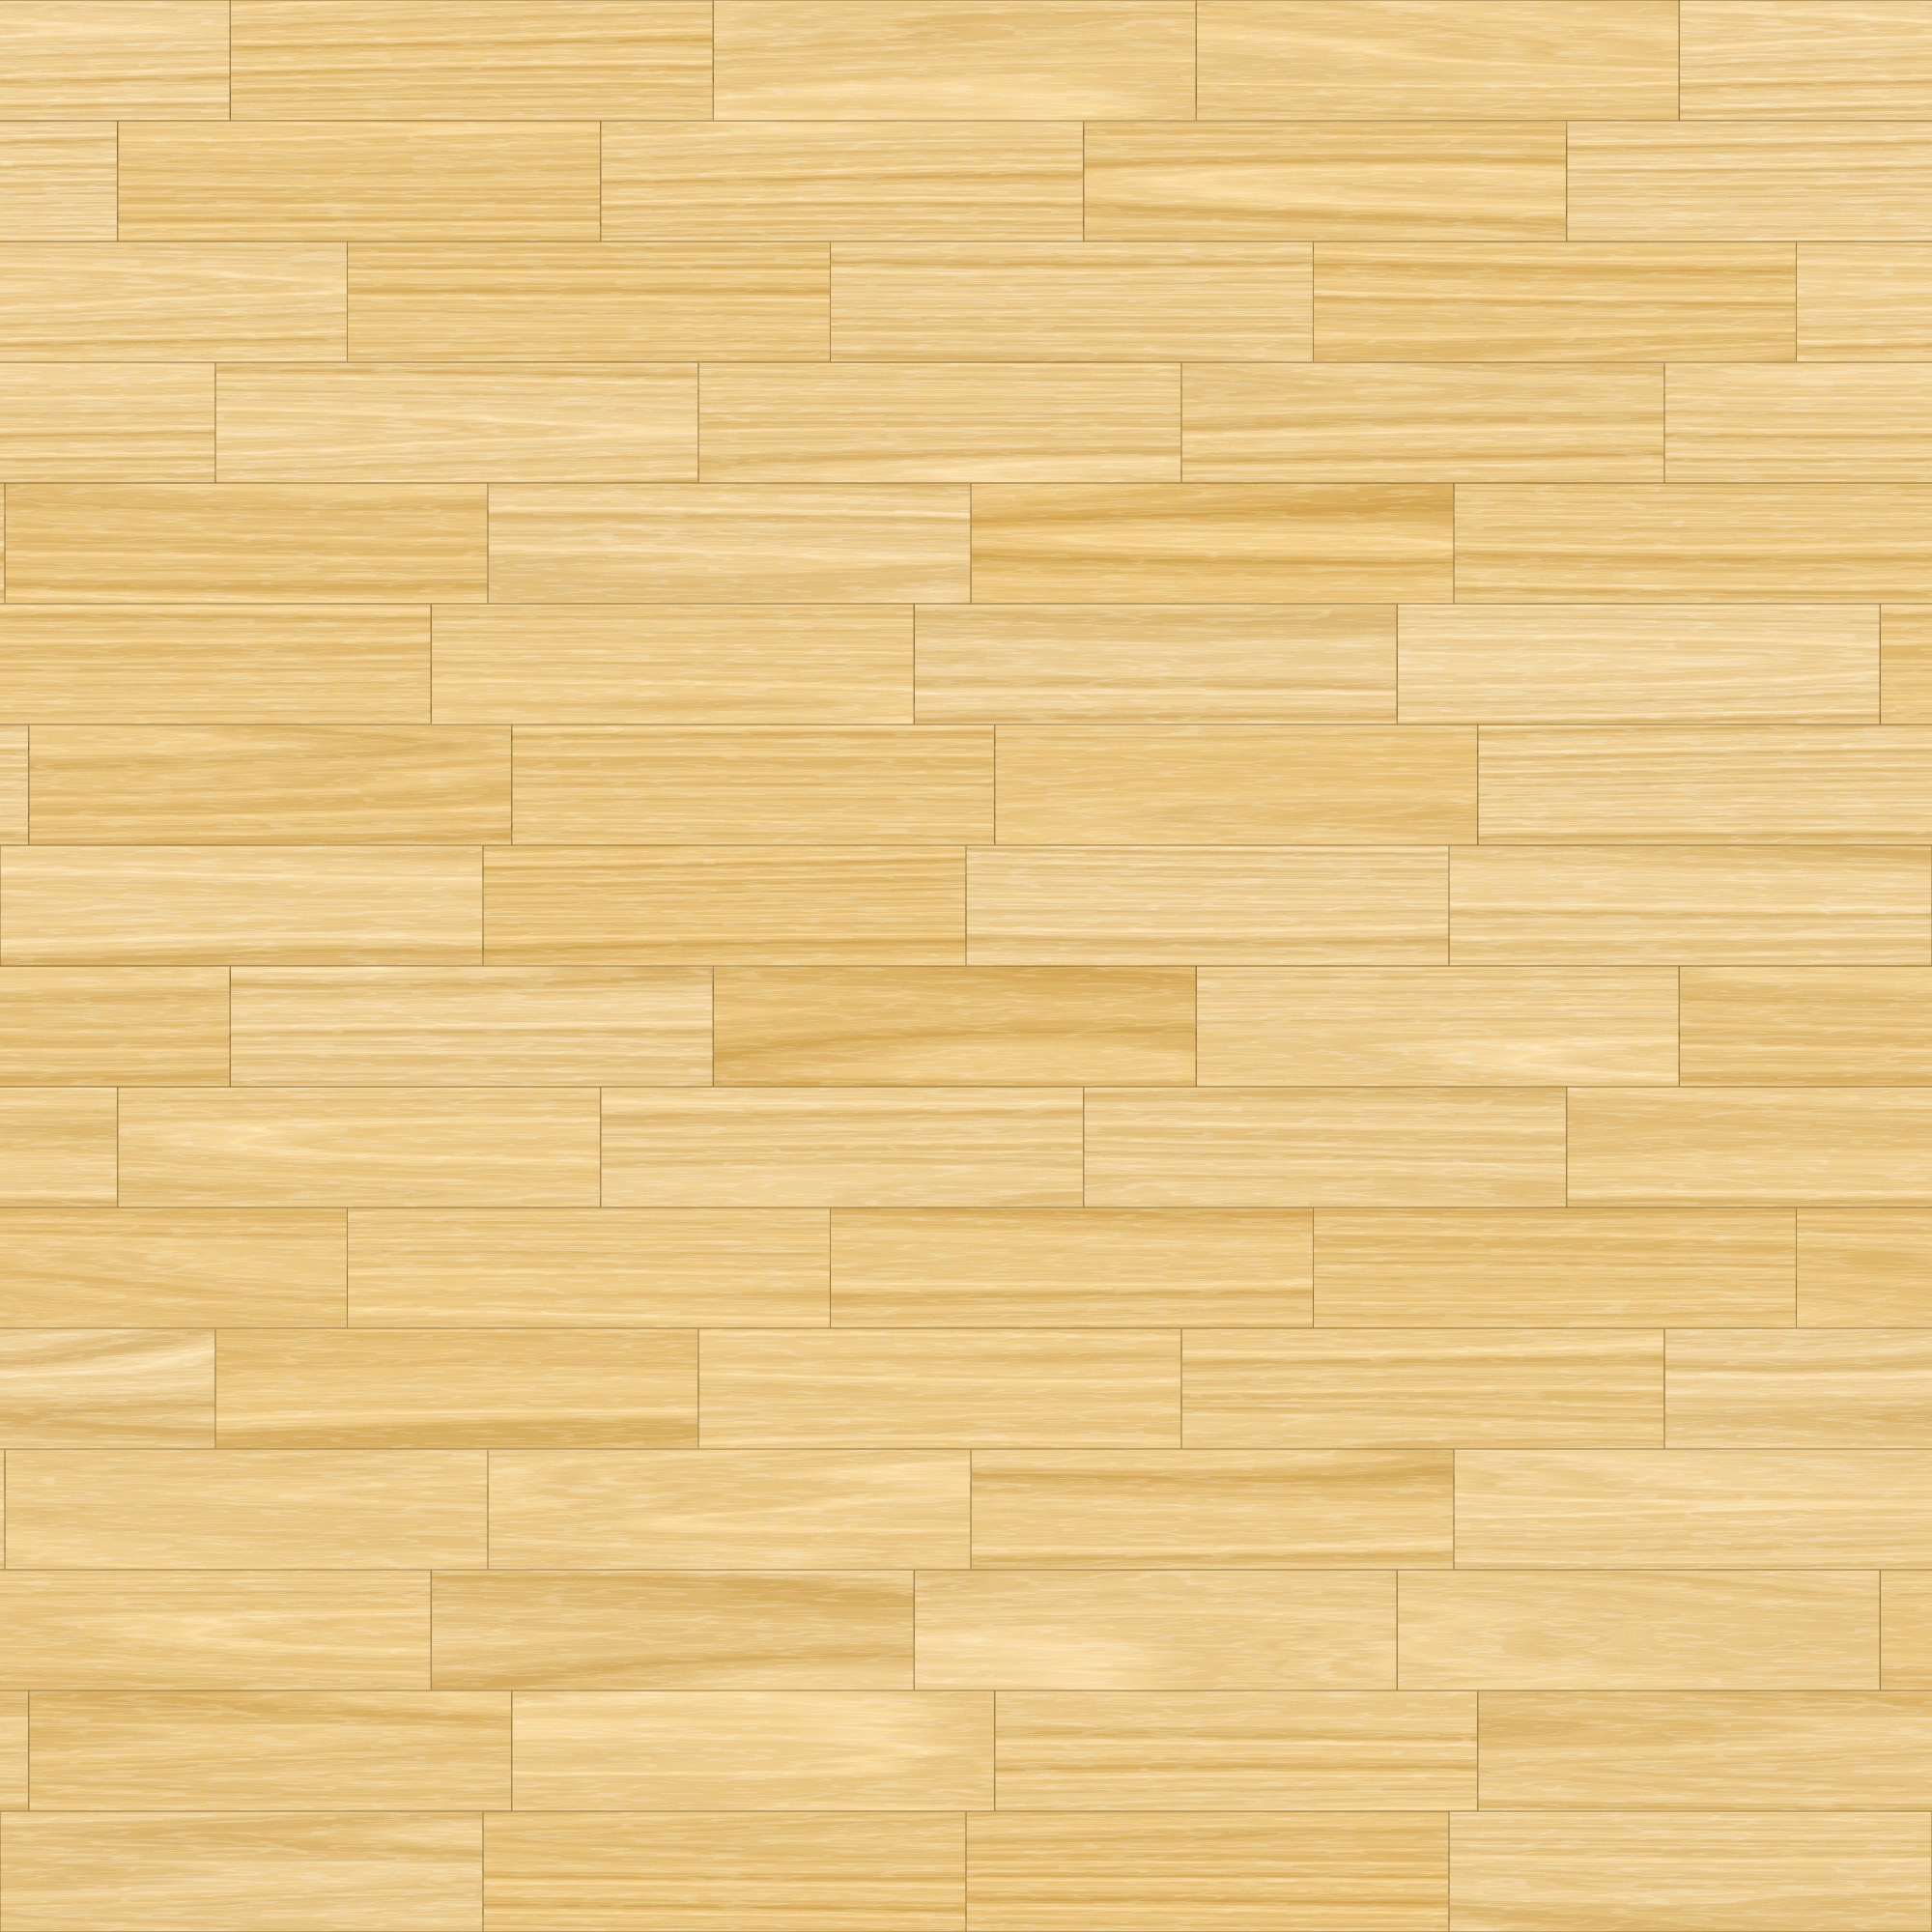 wood floor texture – seamless rich wood patterns | www.myfreetextures